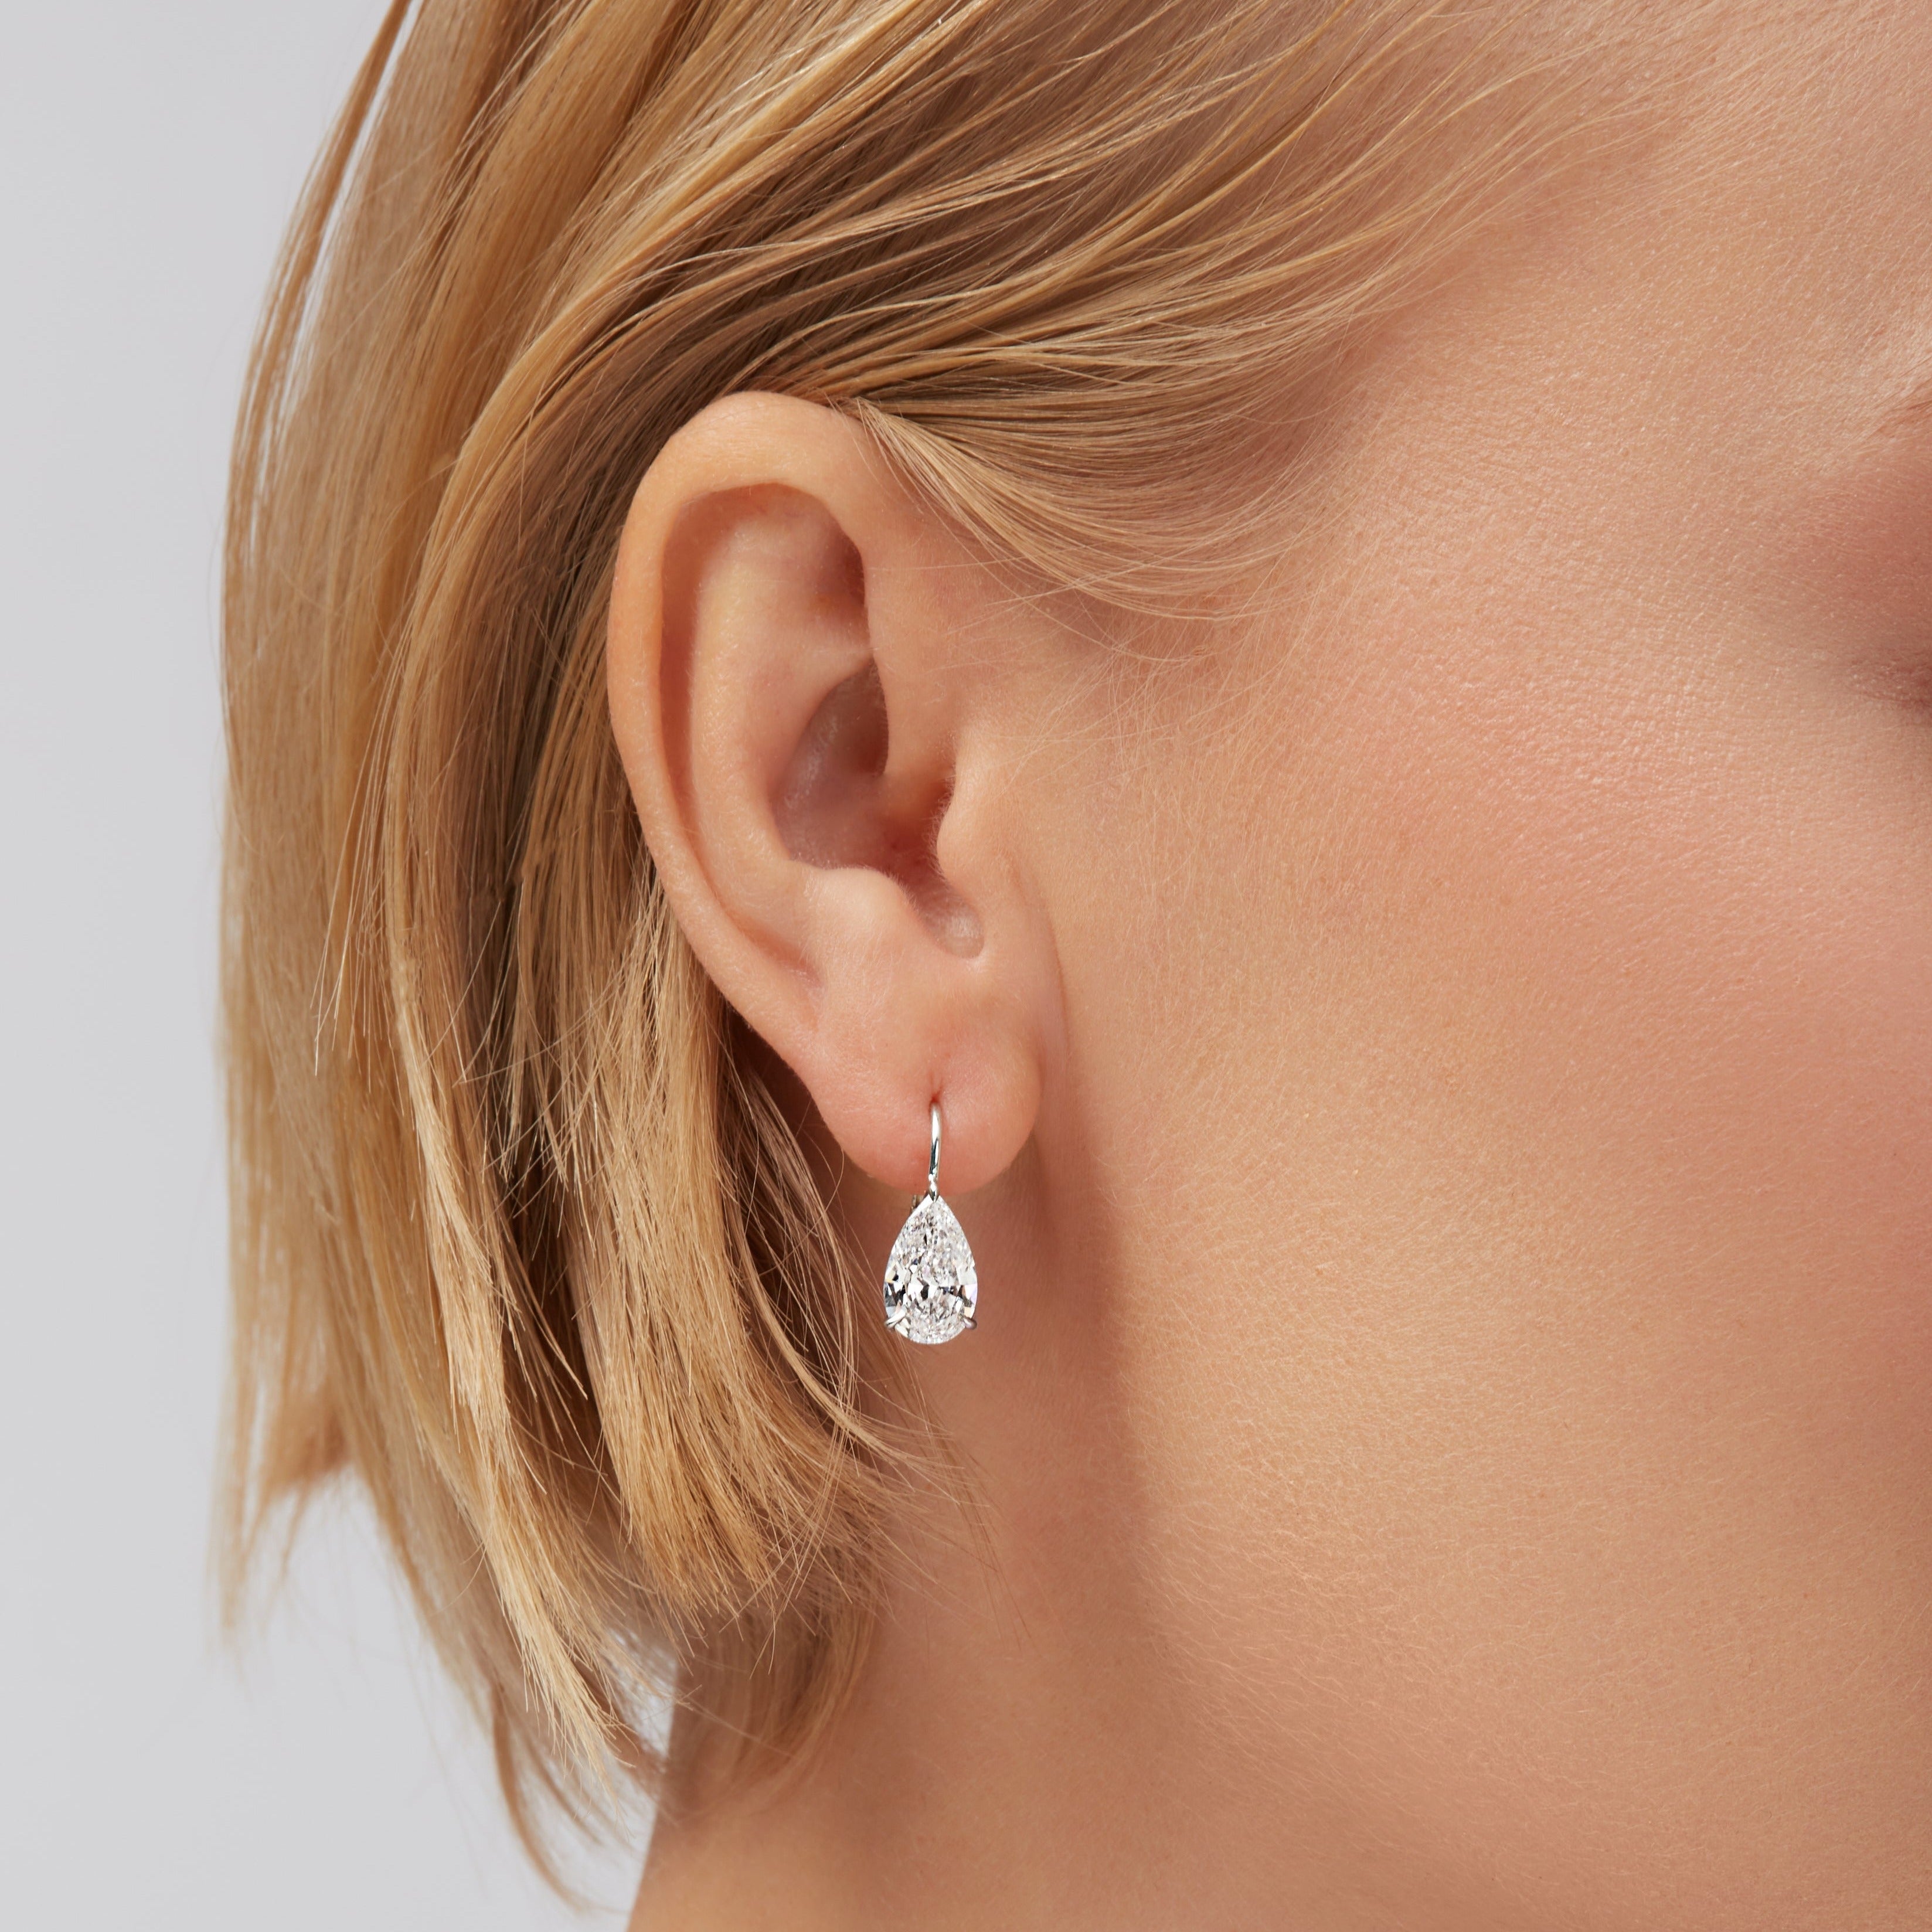 Pear Shaped Diamond Leverback Earrings in 18K White Gold, GIA Certified